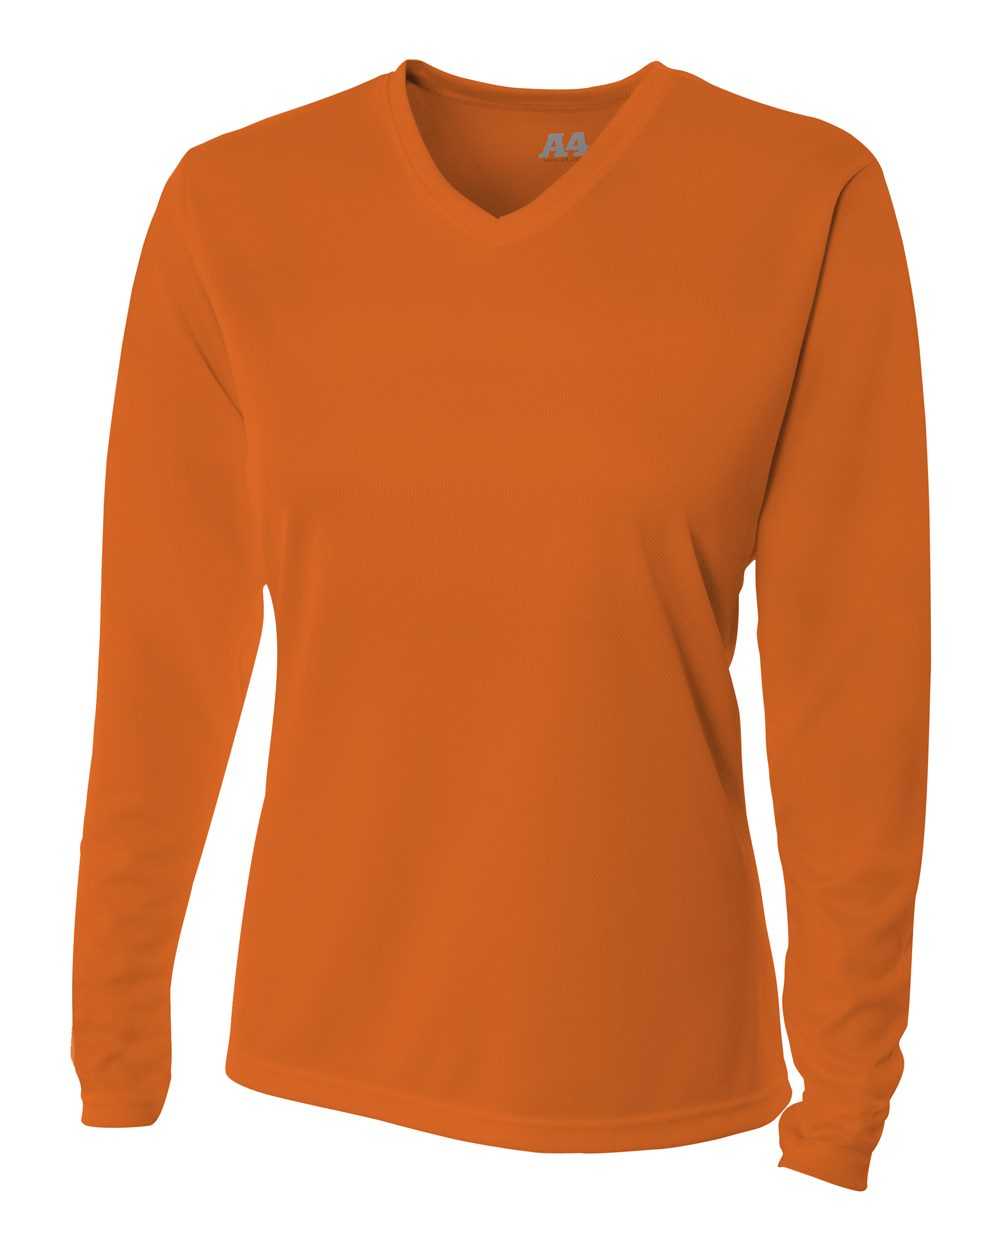 A4 NW3255 Women's Long Sleeve V-Neck Birds Eye Mesh Tee - Athletic Orange - HIT a Double